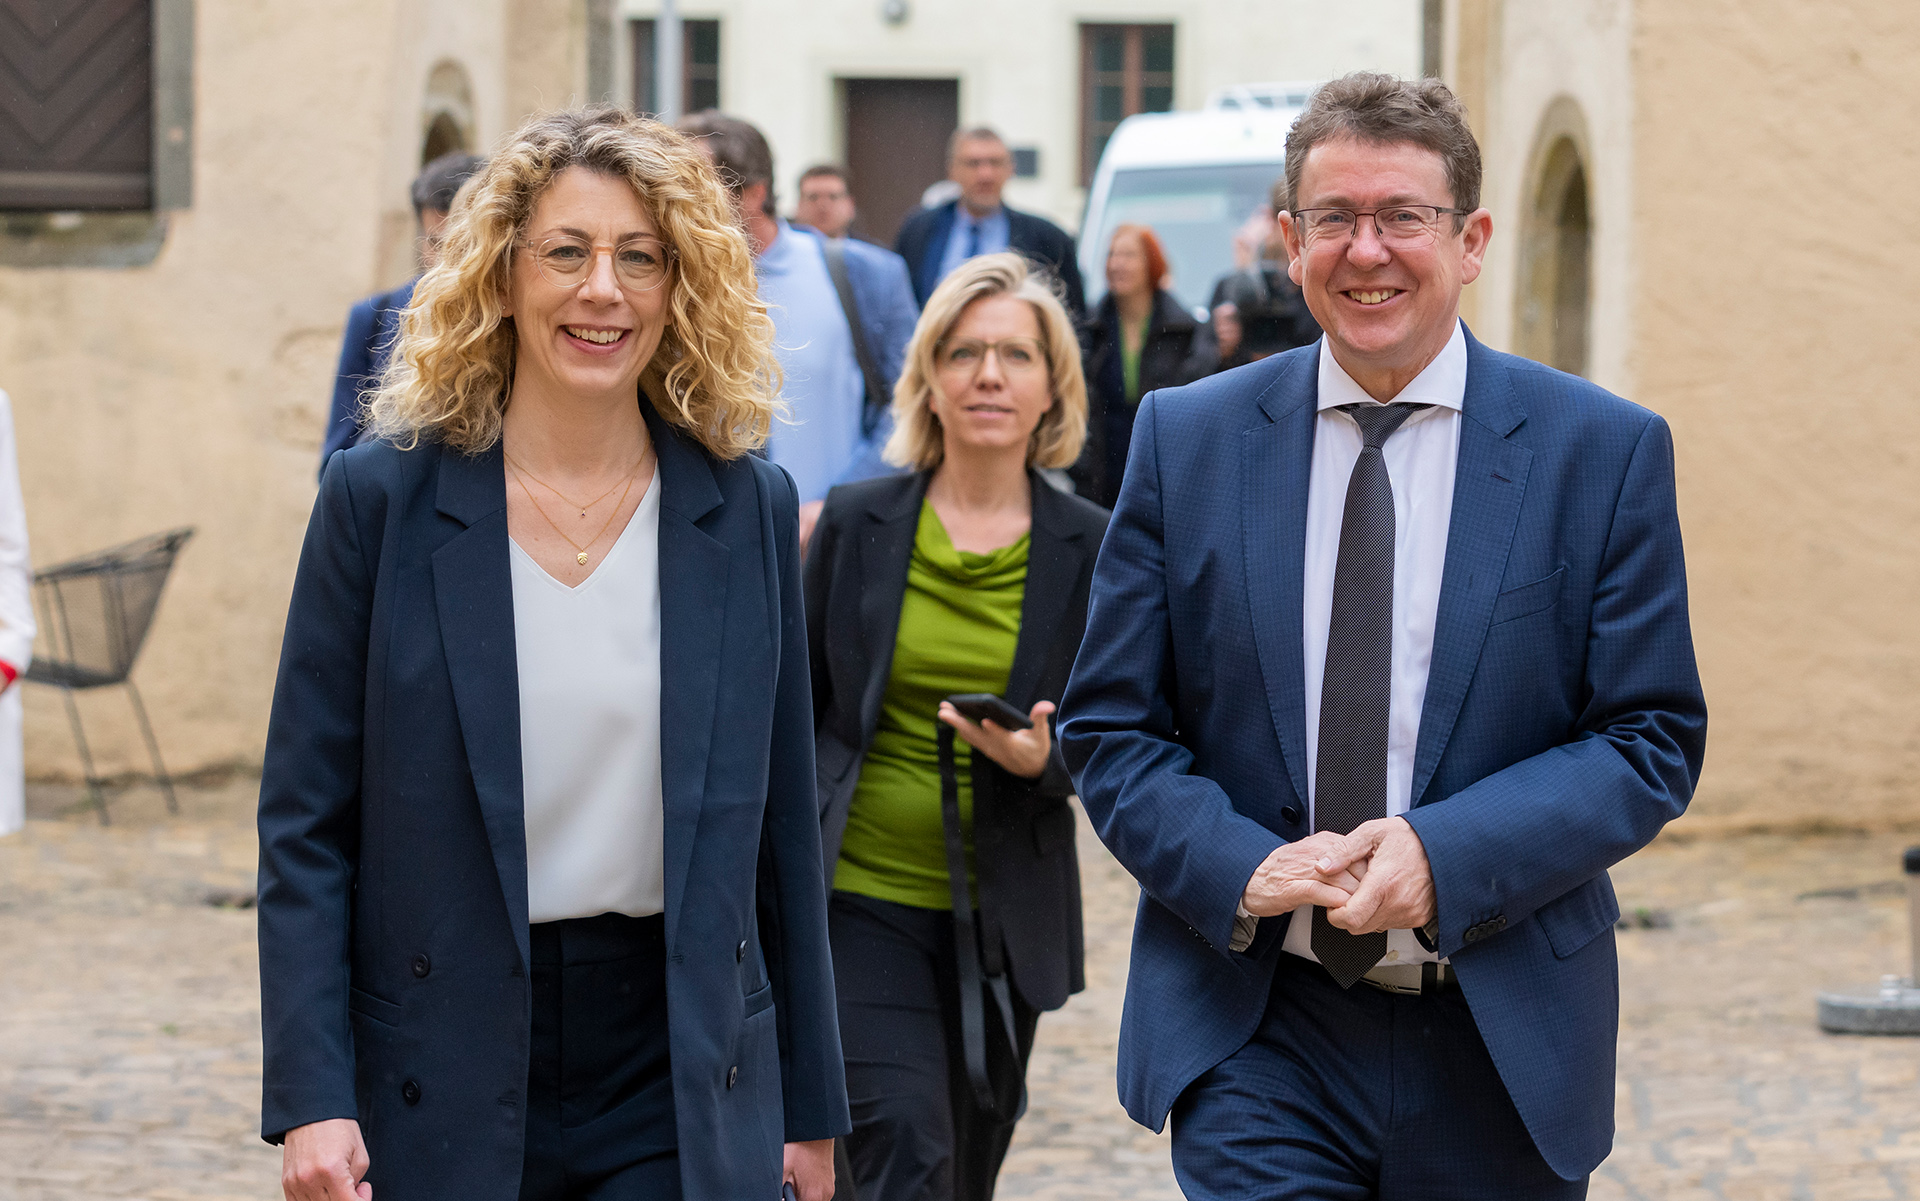 I ministri Joëlle Welfring (Lussemburgo) e Leonore Gewessler (Austria) insieme al consigliere federale Albert Rösti 